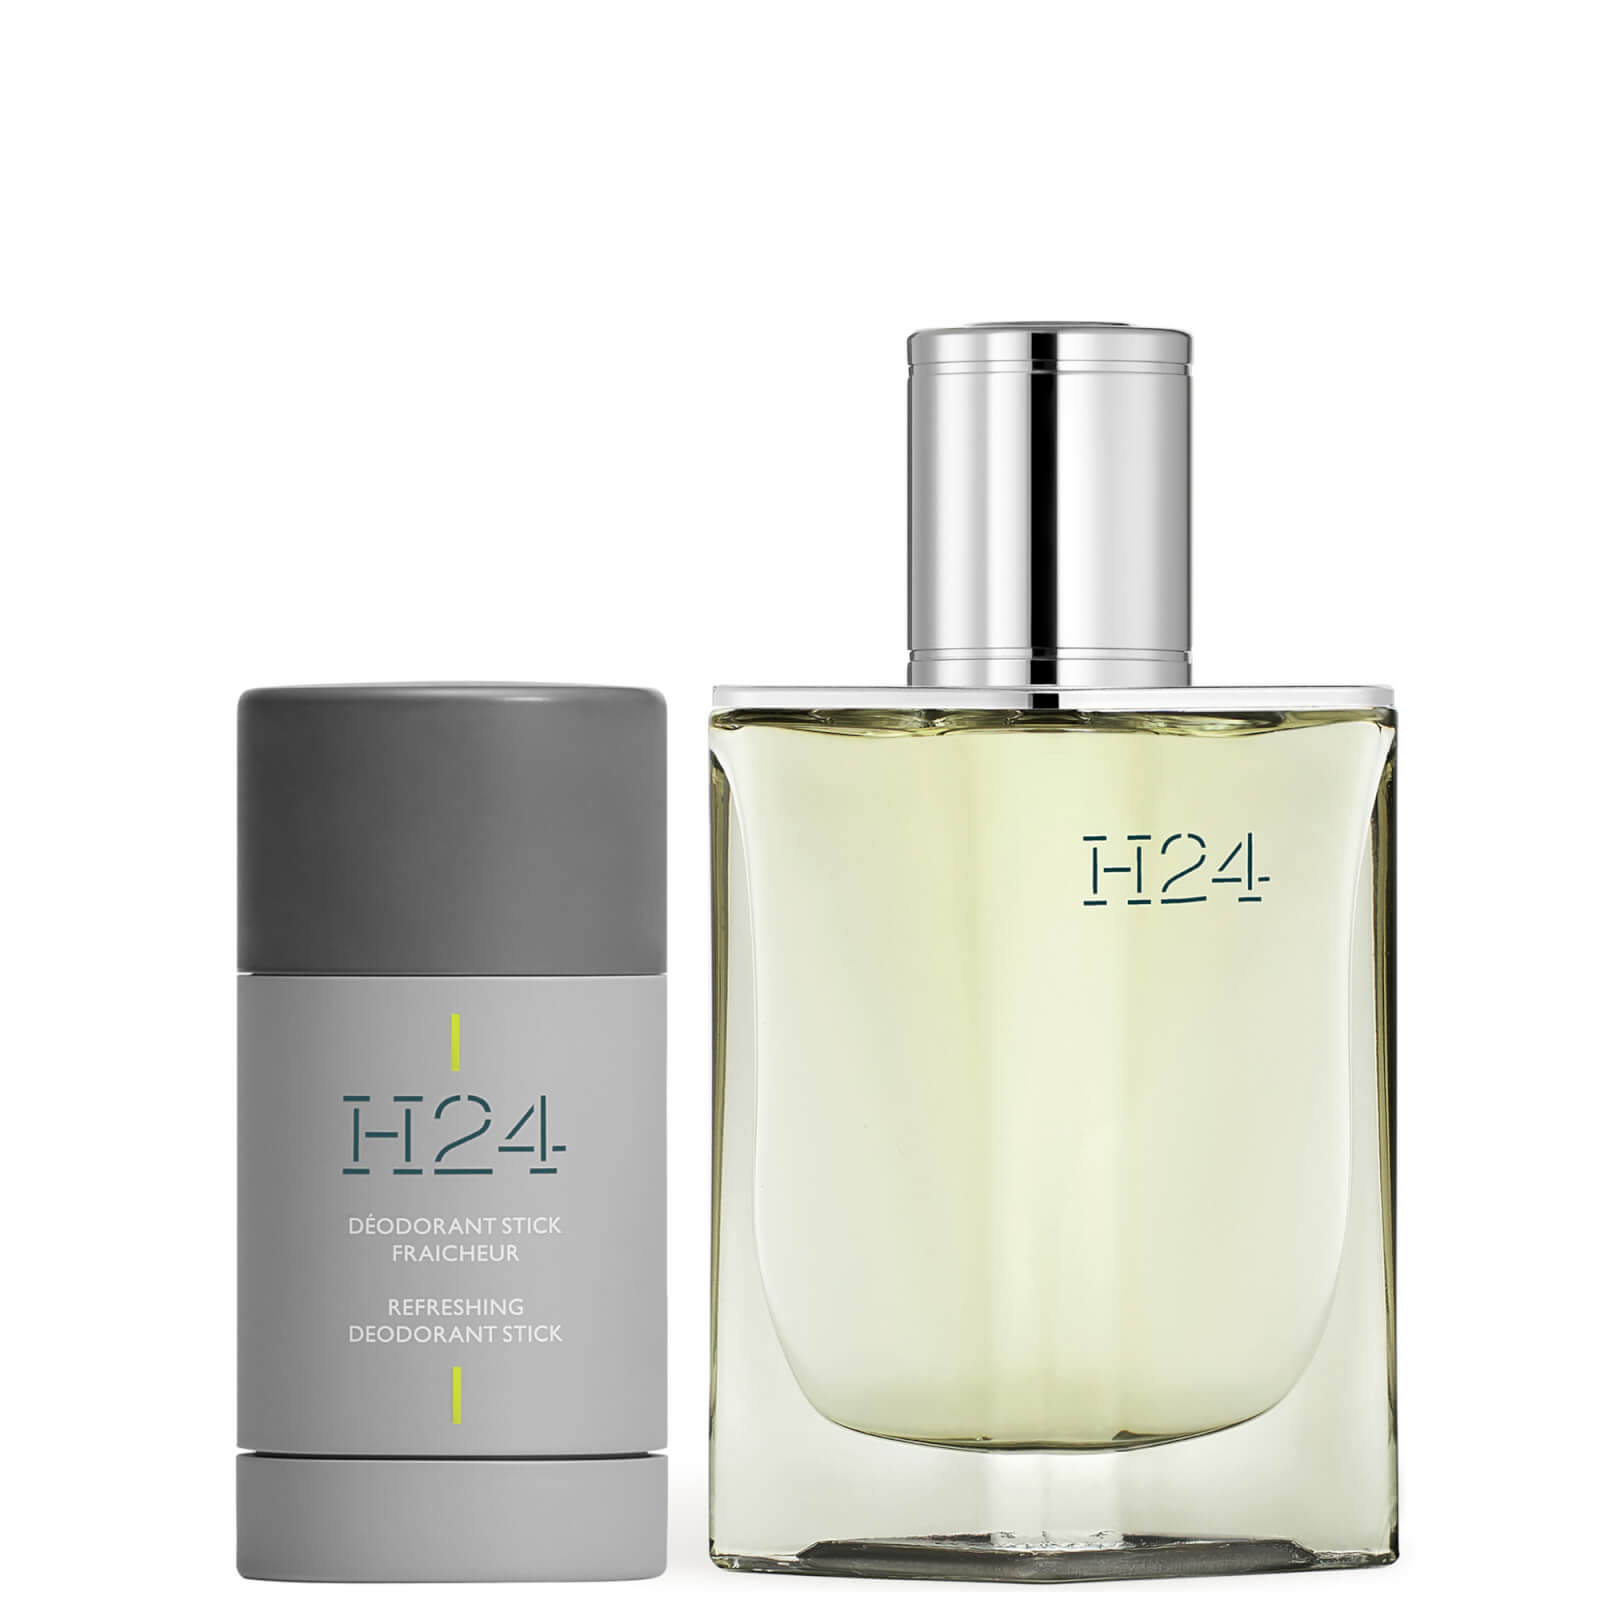 Photos - Women's Fragrance Hermes Hermès H24 Eau de Parfum 50ml and Deodorant Duo HERMHEDPADD1 